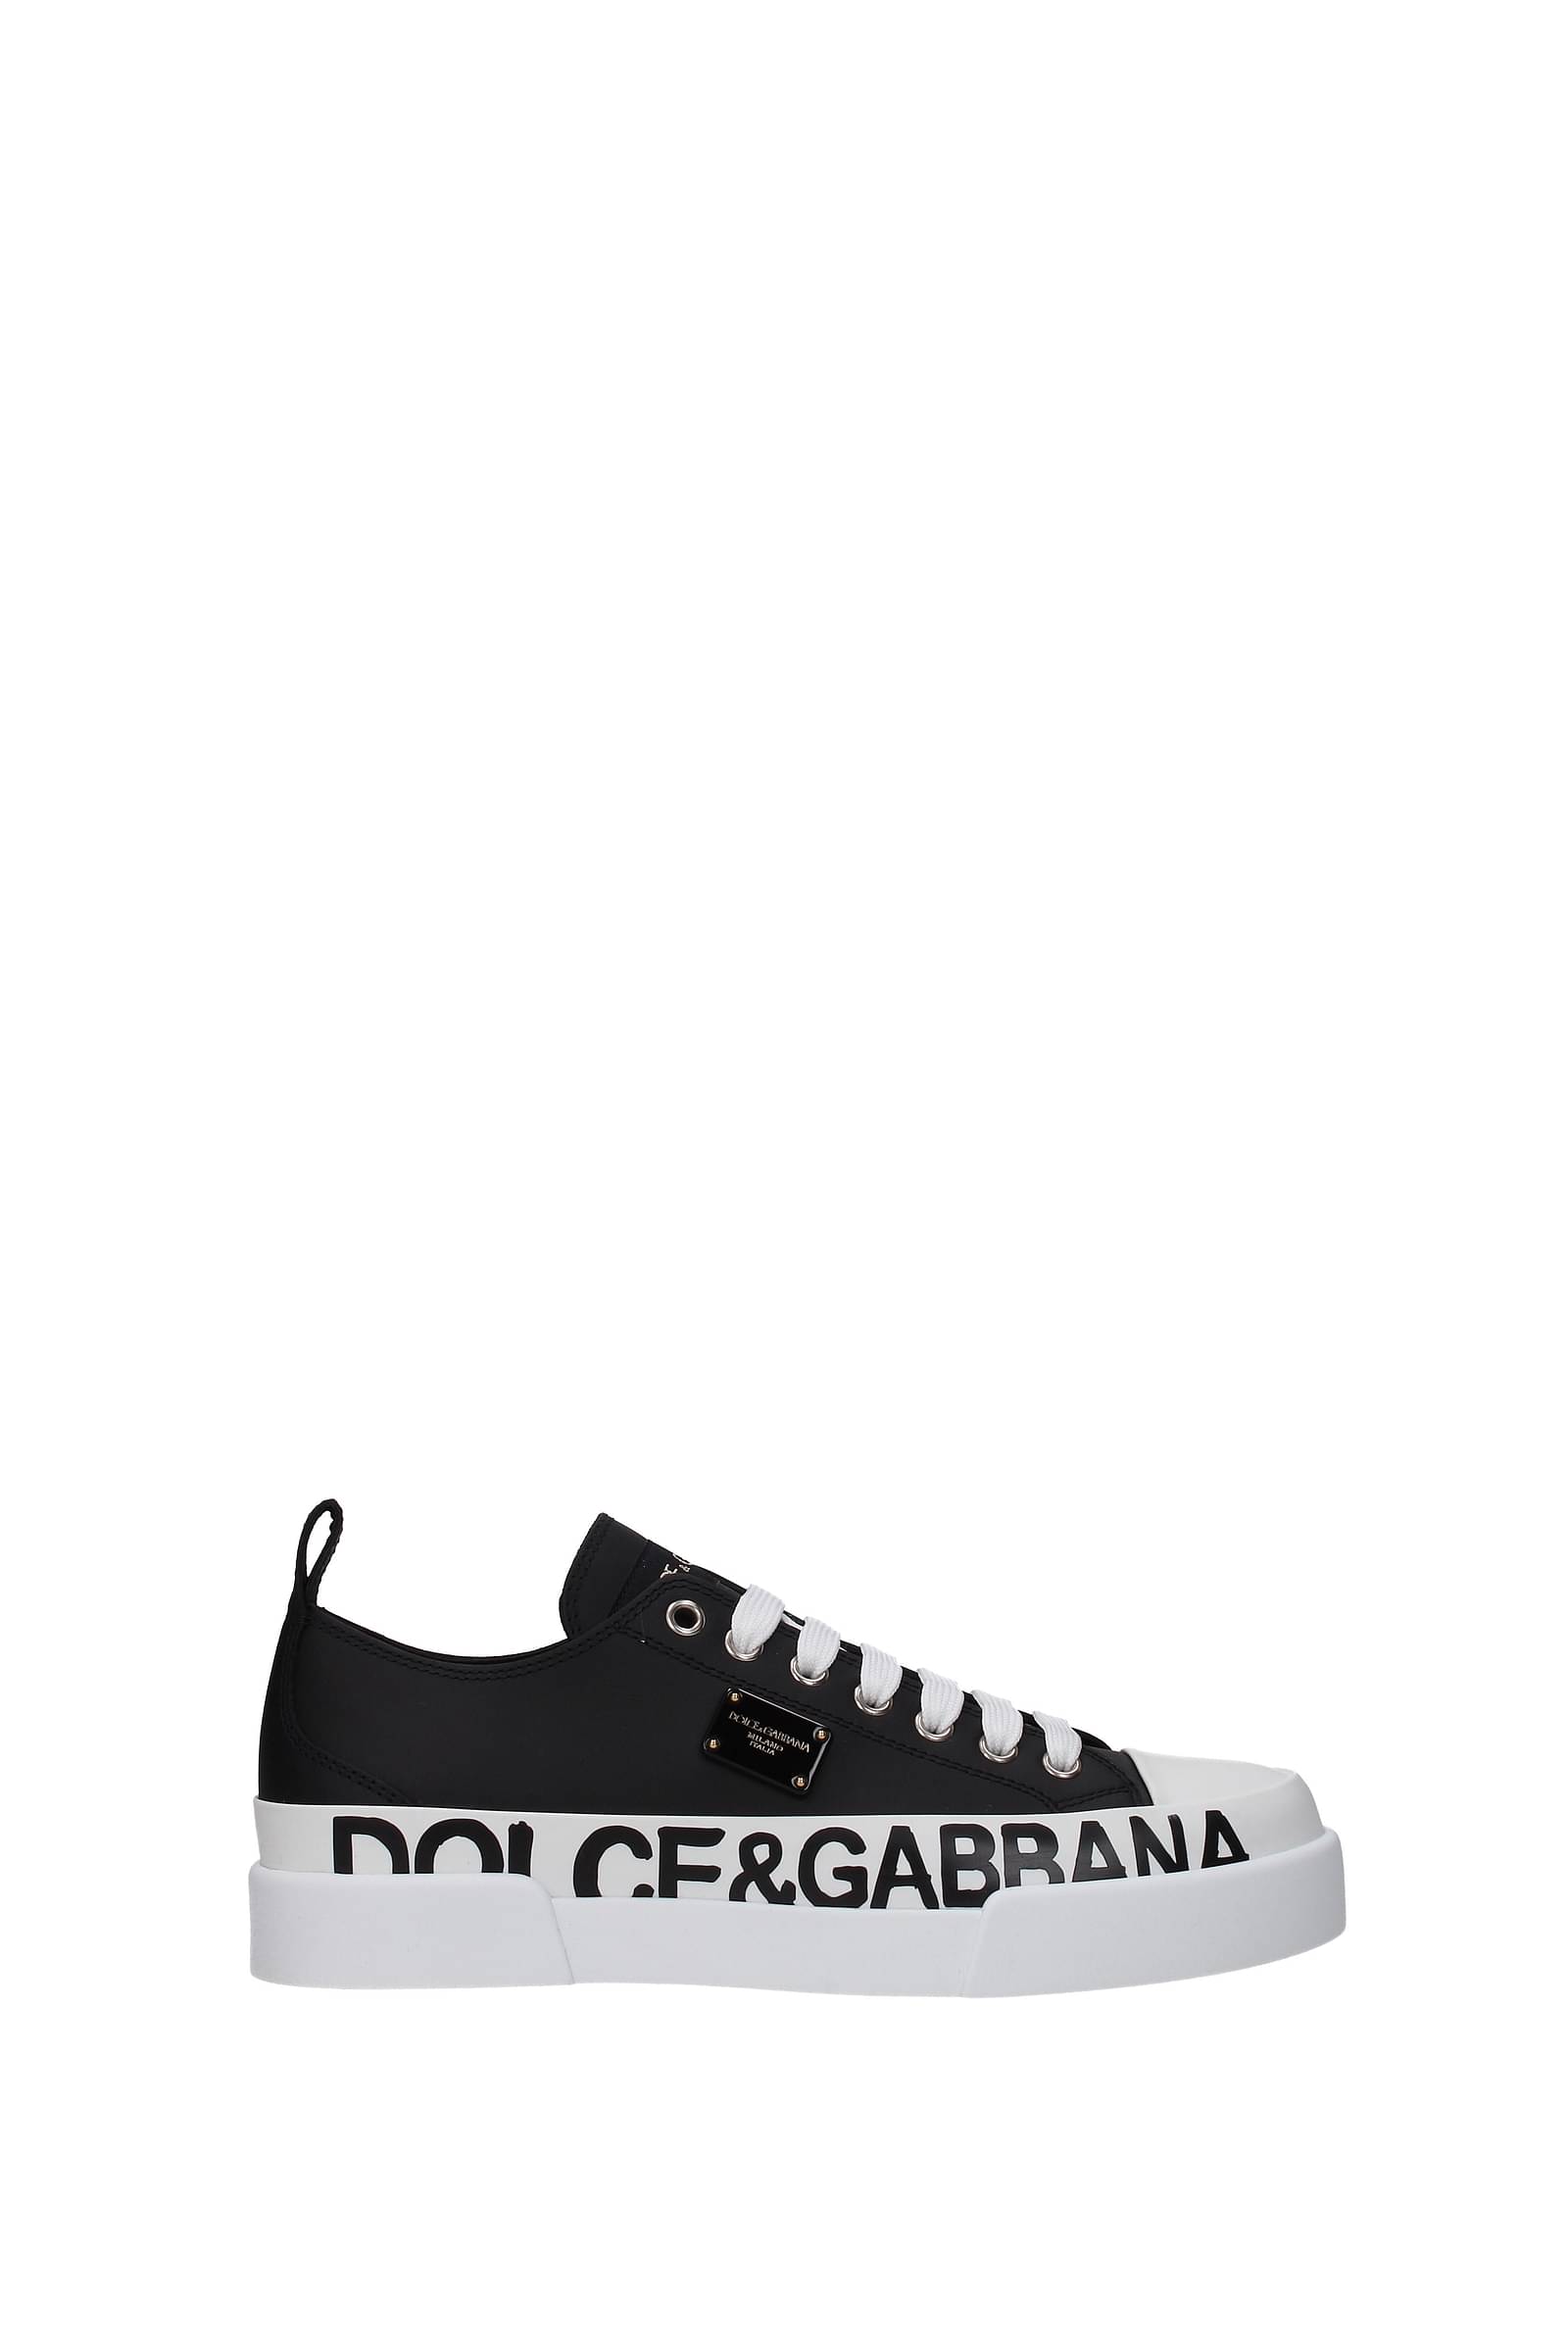 Dolce&Gabbana Sneakers Women CK1886AO51589690 Leather Black Black 